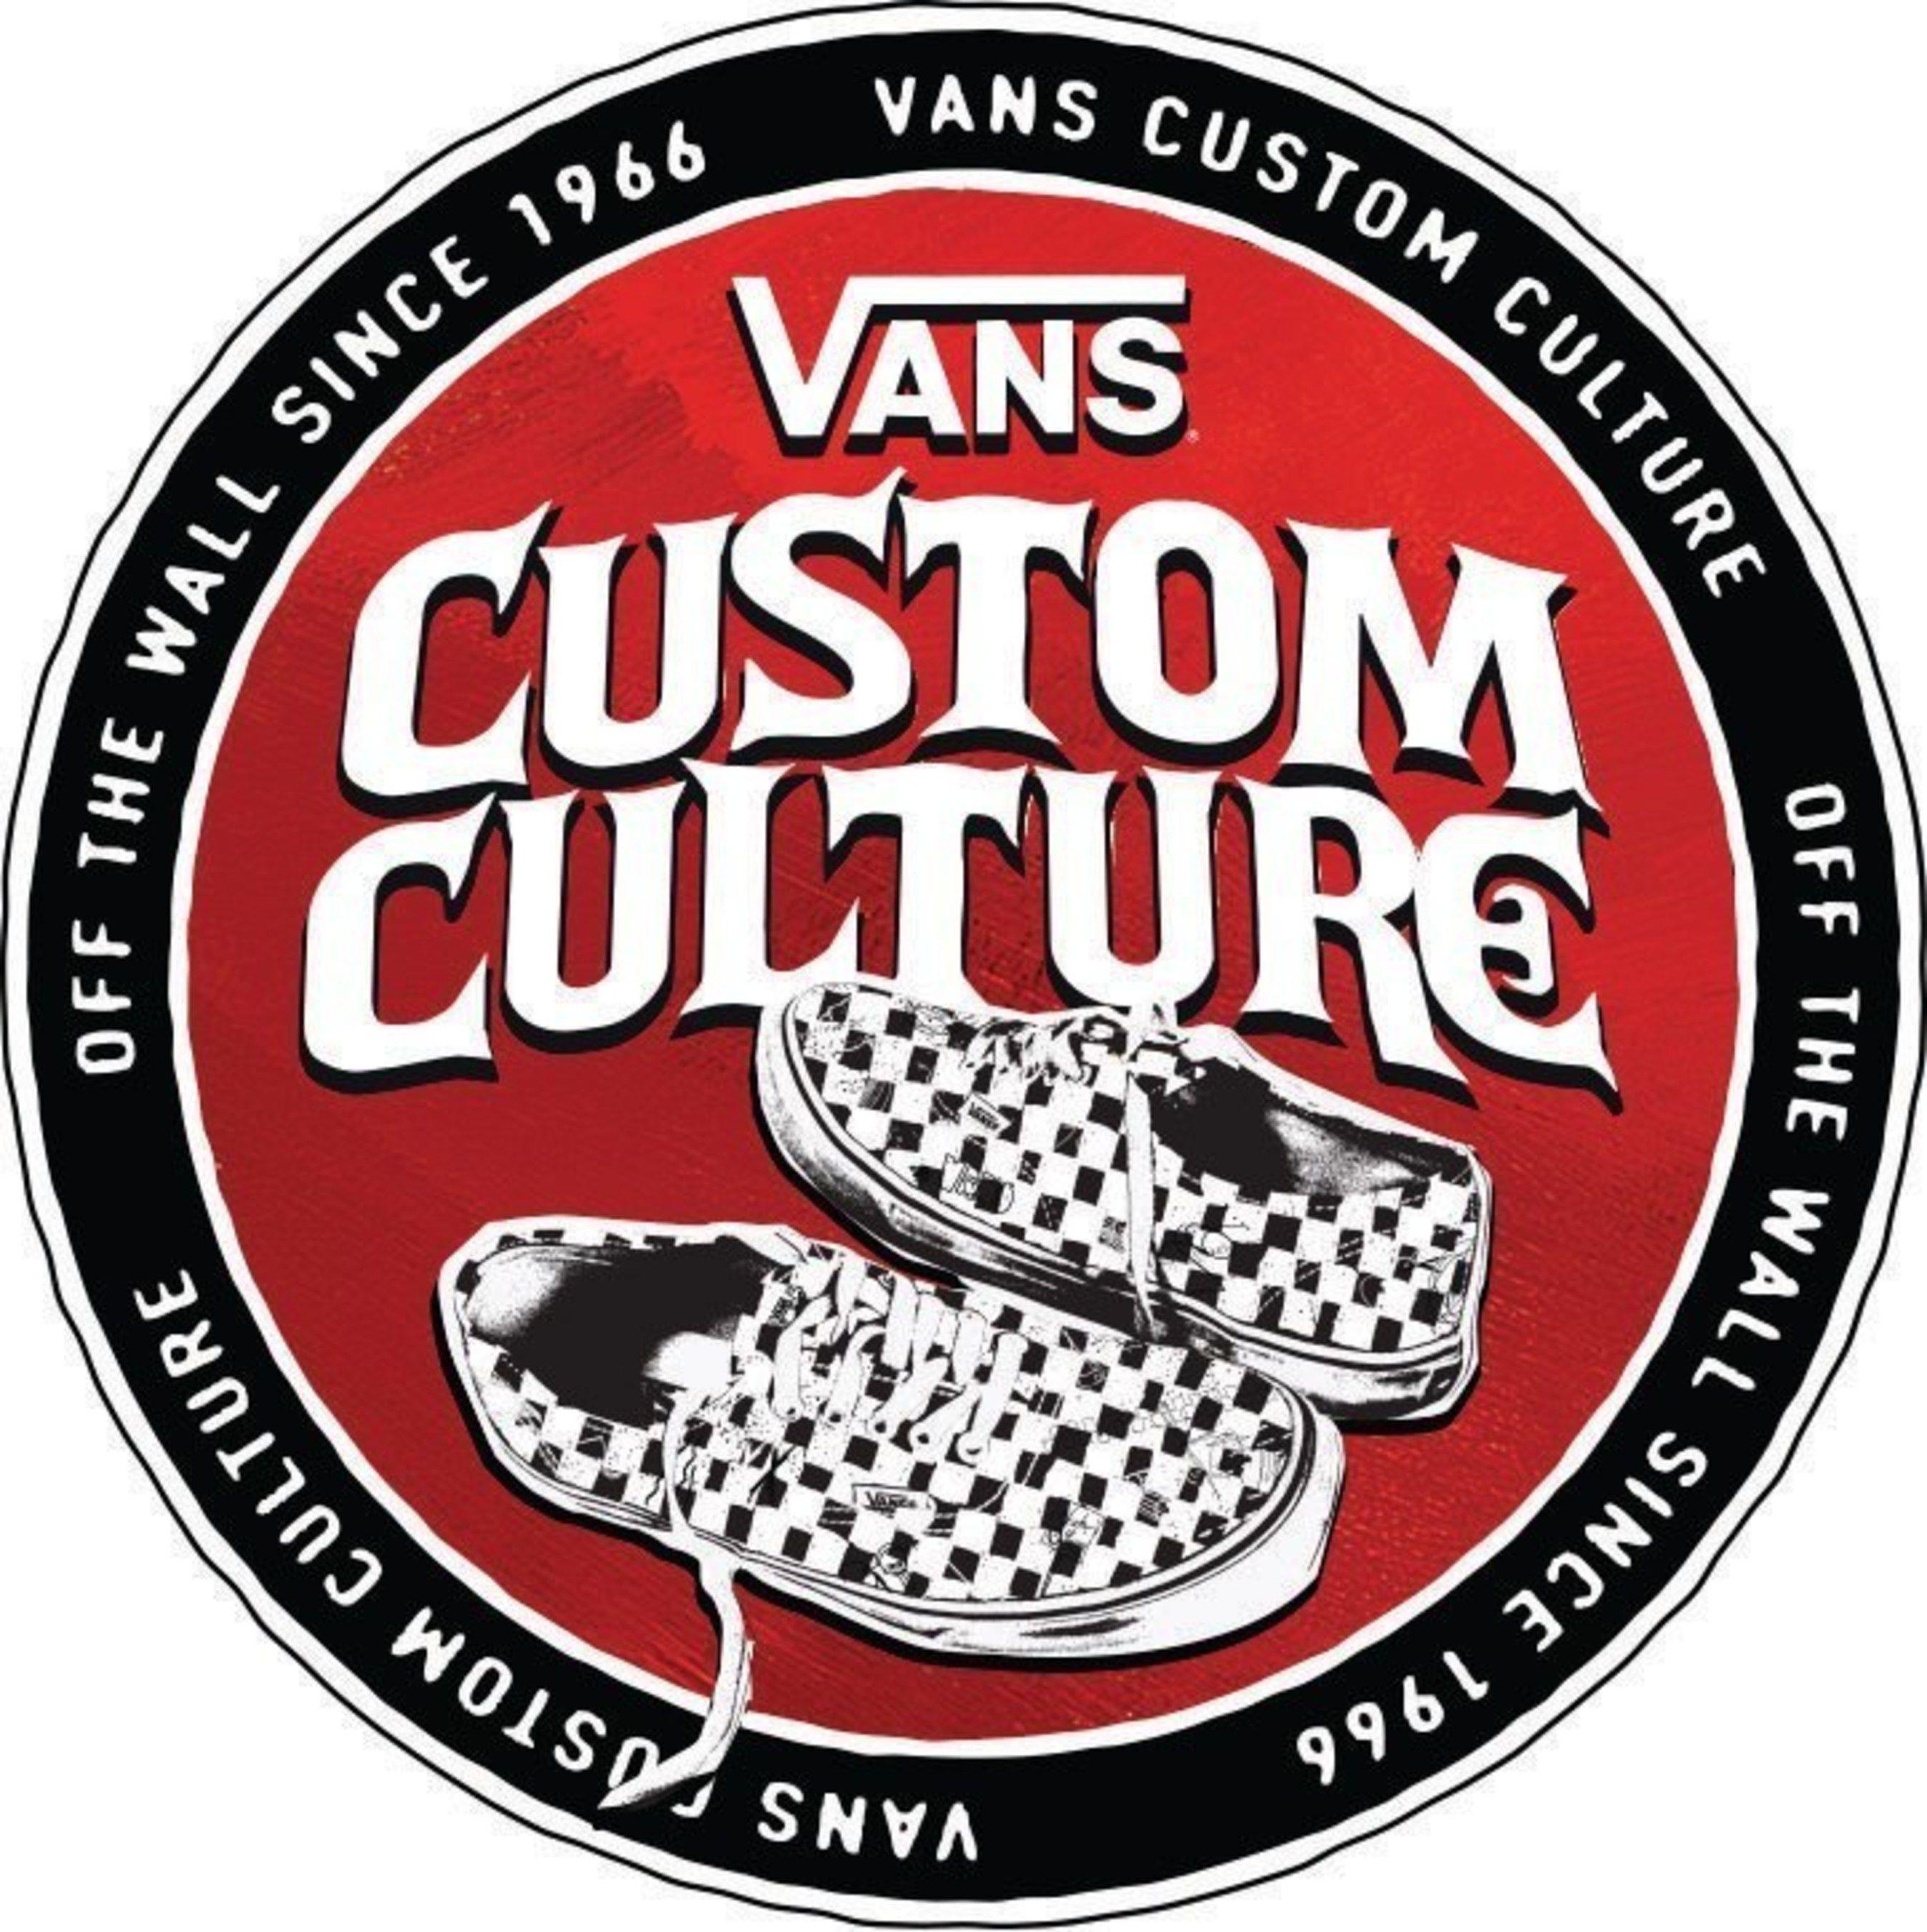 Custom Vans Logo - Vans Custom Culture Named a Finalist in 2016 Cause Marketing Halo Awards